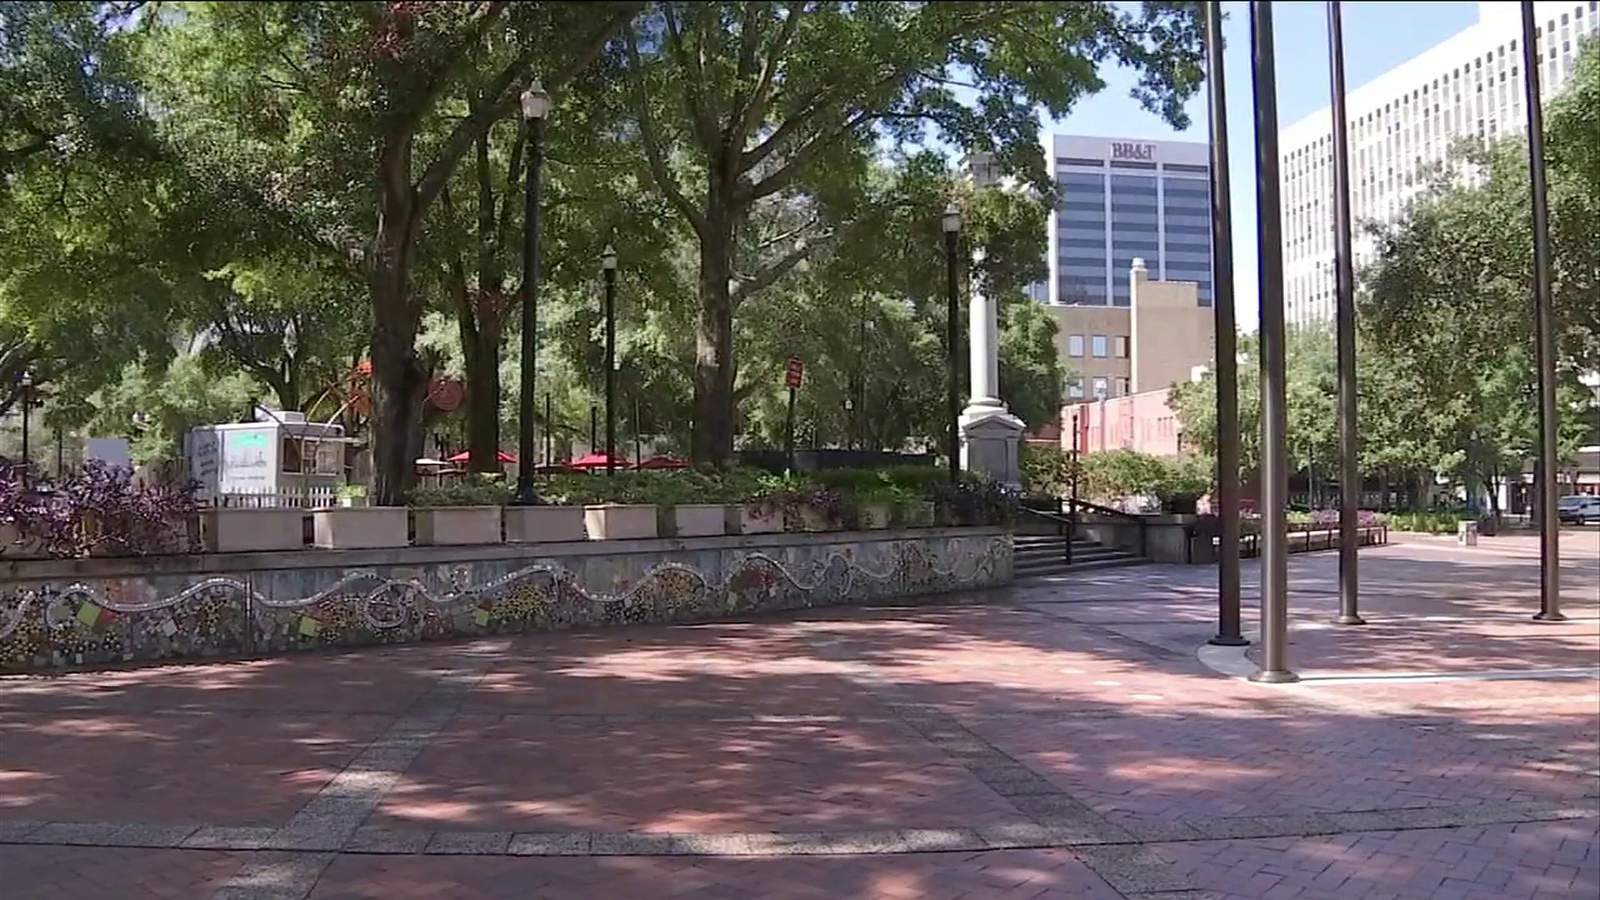 Councilman wants to pump the brakes on renaming Jacksonvilles buildings, parks